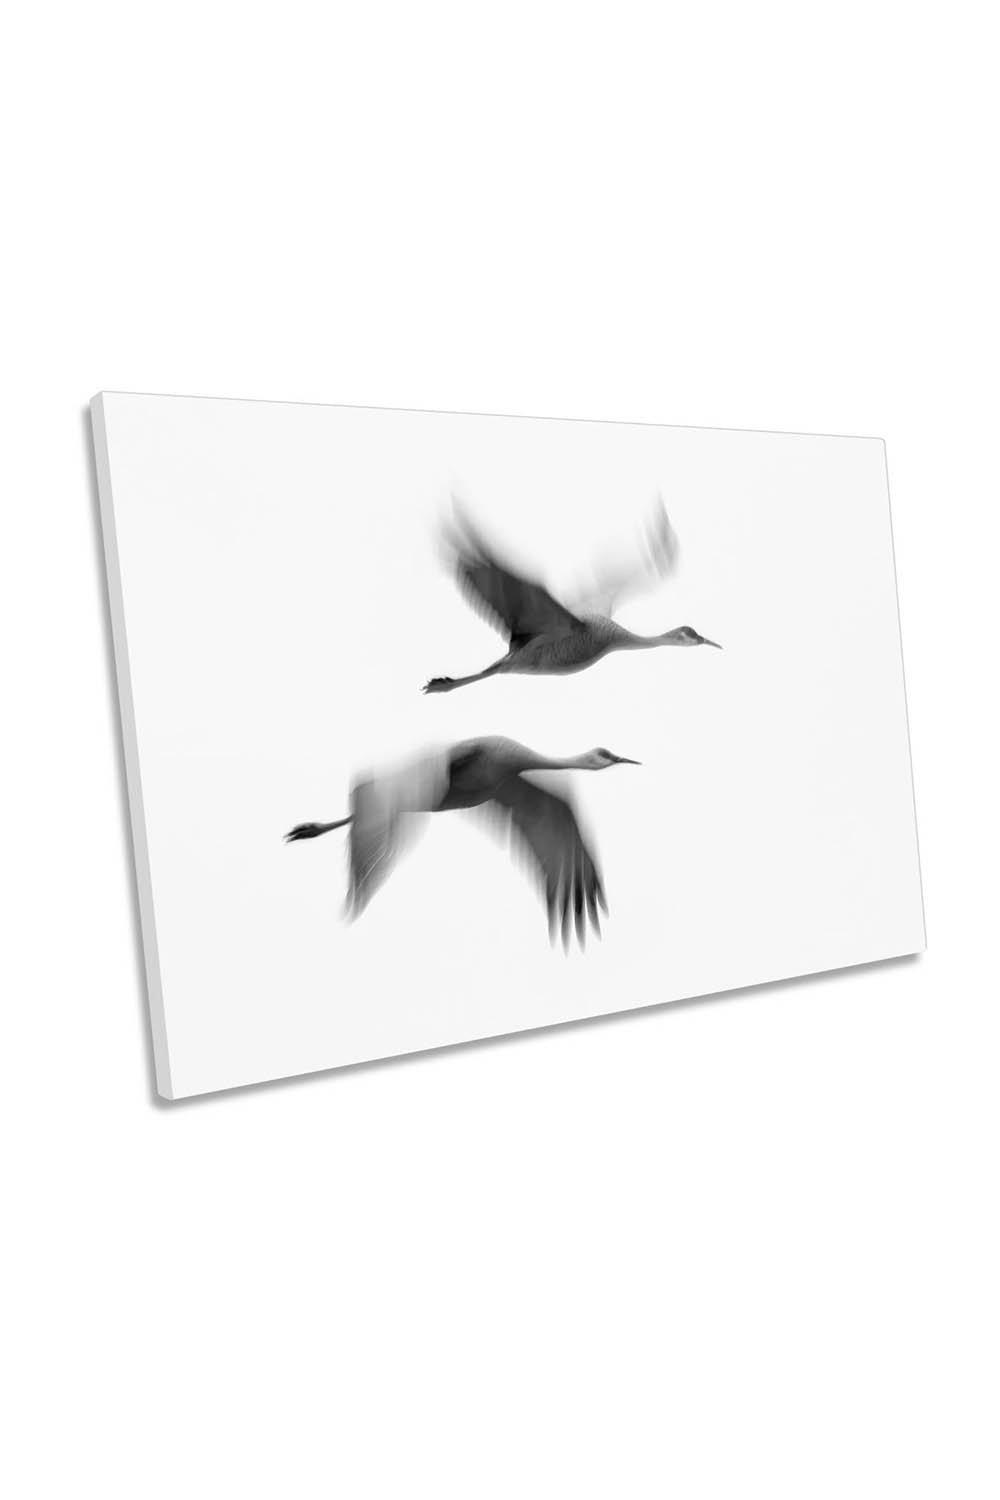 Dream Couple Crane Birds Flight Canvas Wall Art Picture Print